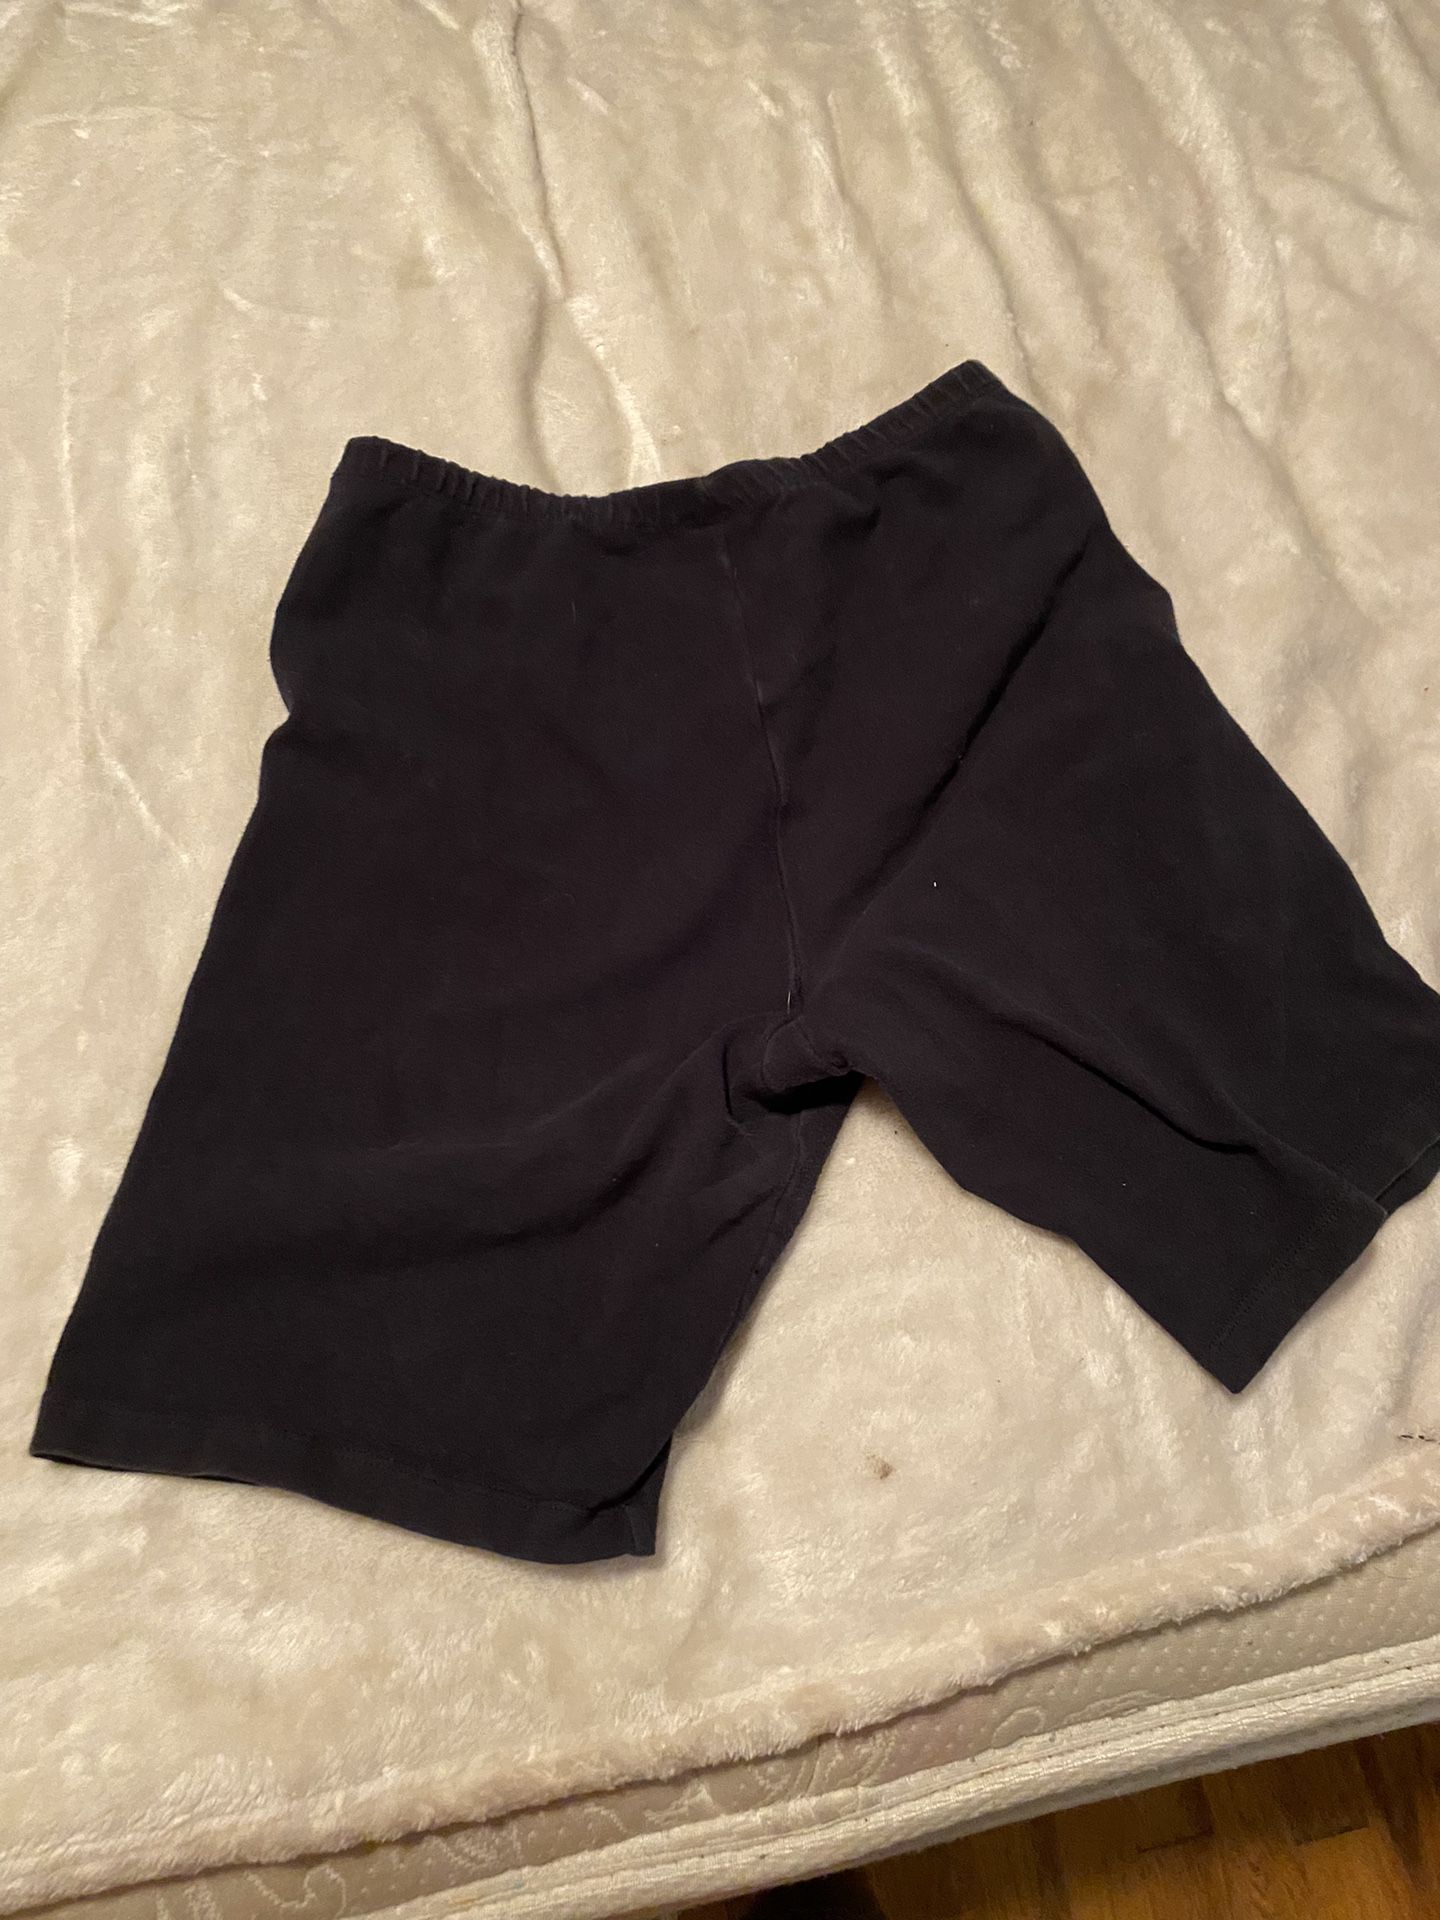 Black Shorts Size Medium 